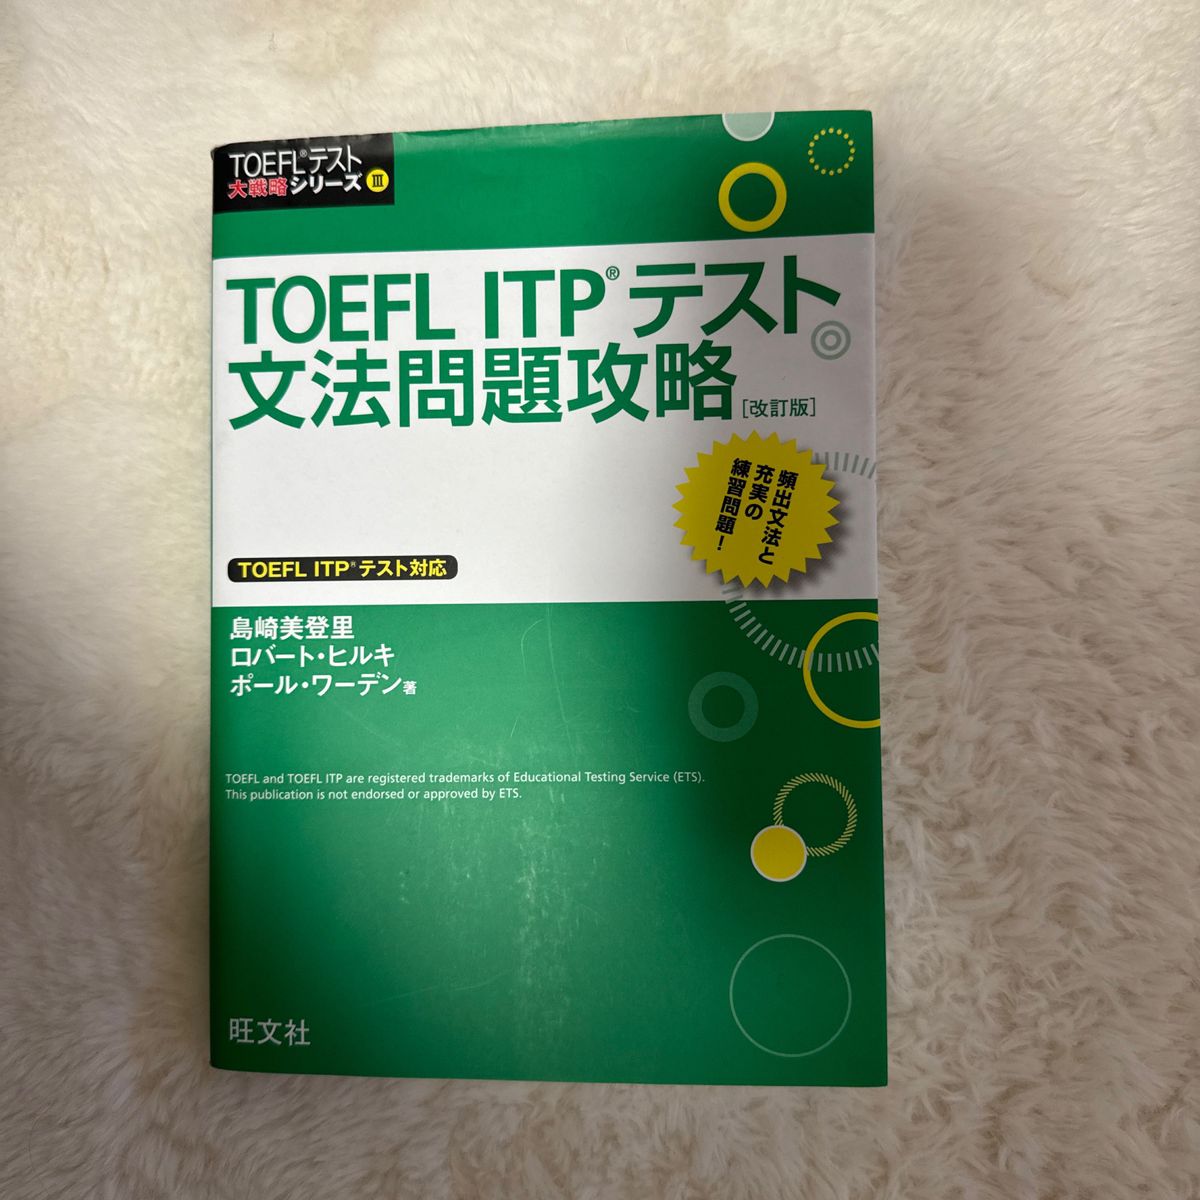 TOEFL 問題集「TOEFL ITPテスト文法問題攻略」